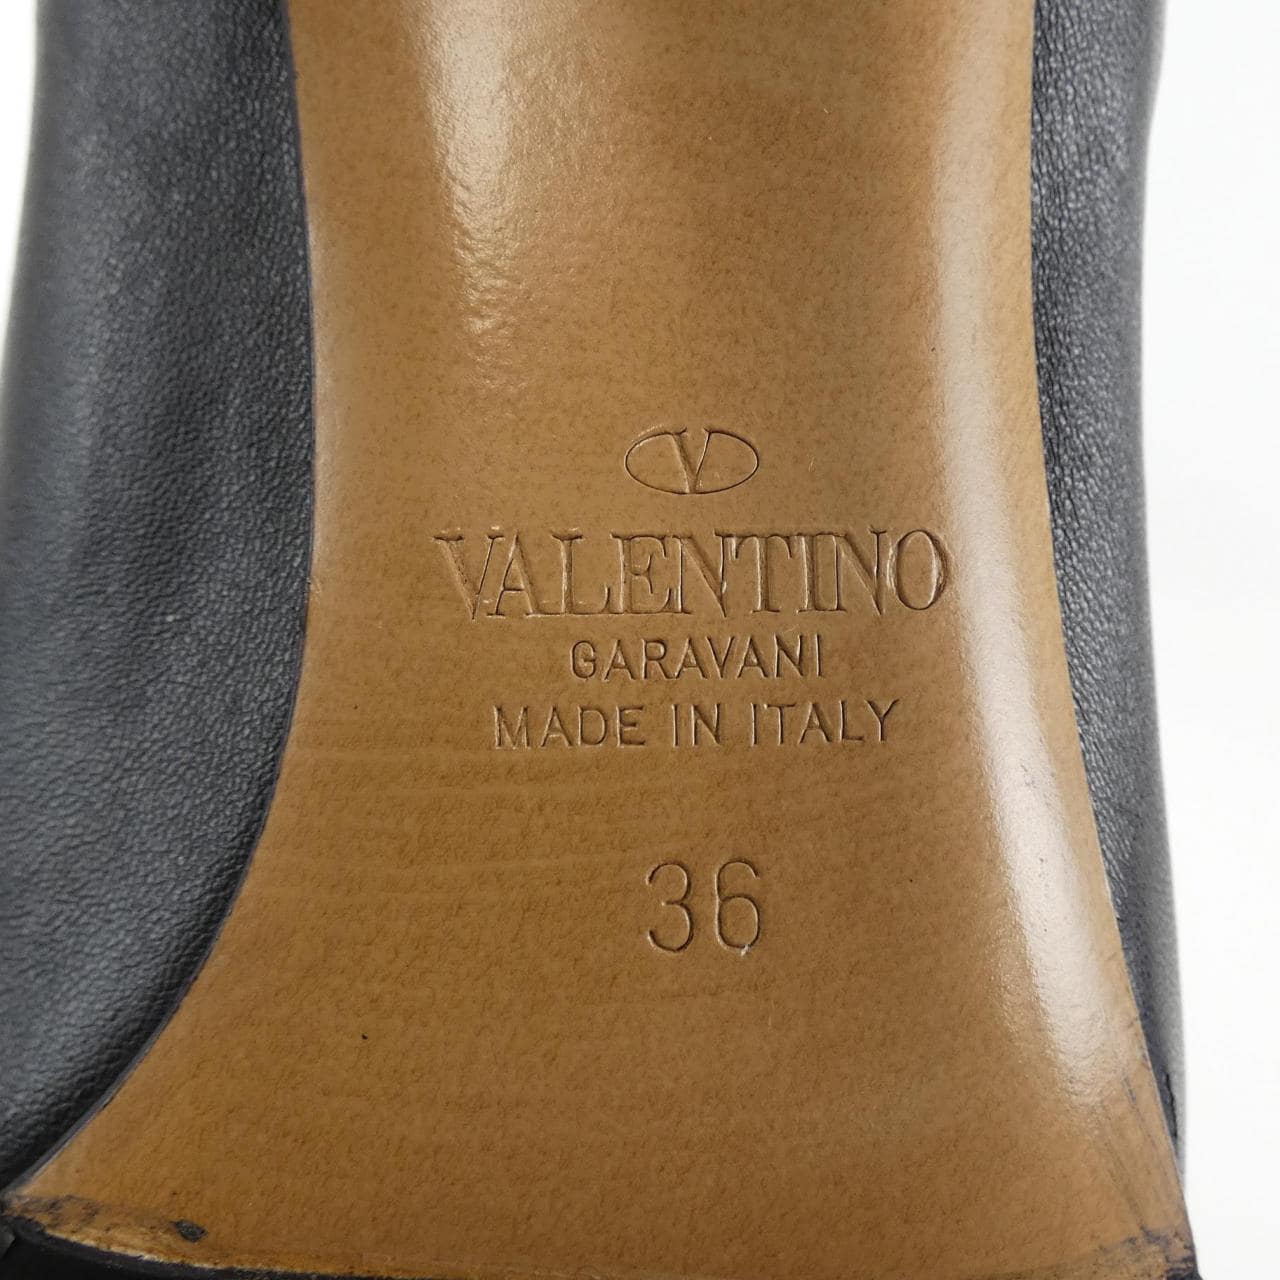 VALENTINO GARAVANI ブーツ 36(22.5cm位)